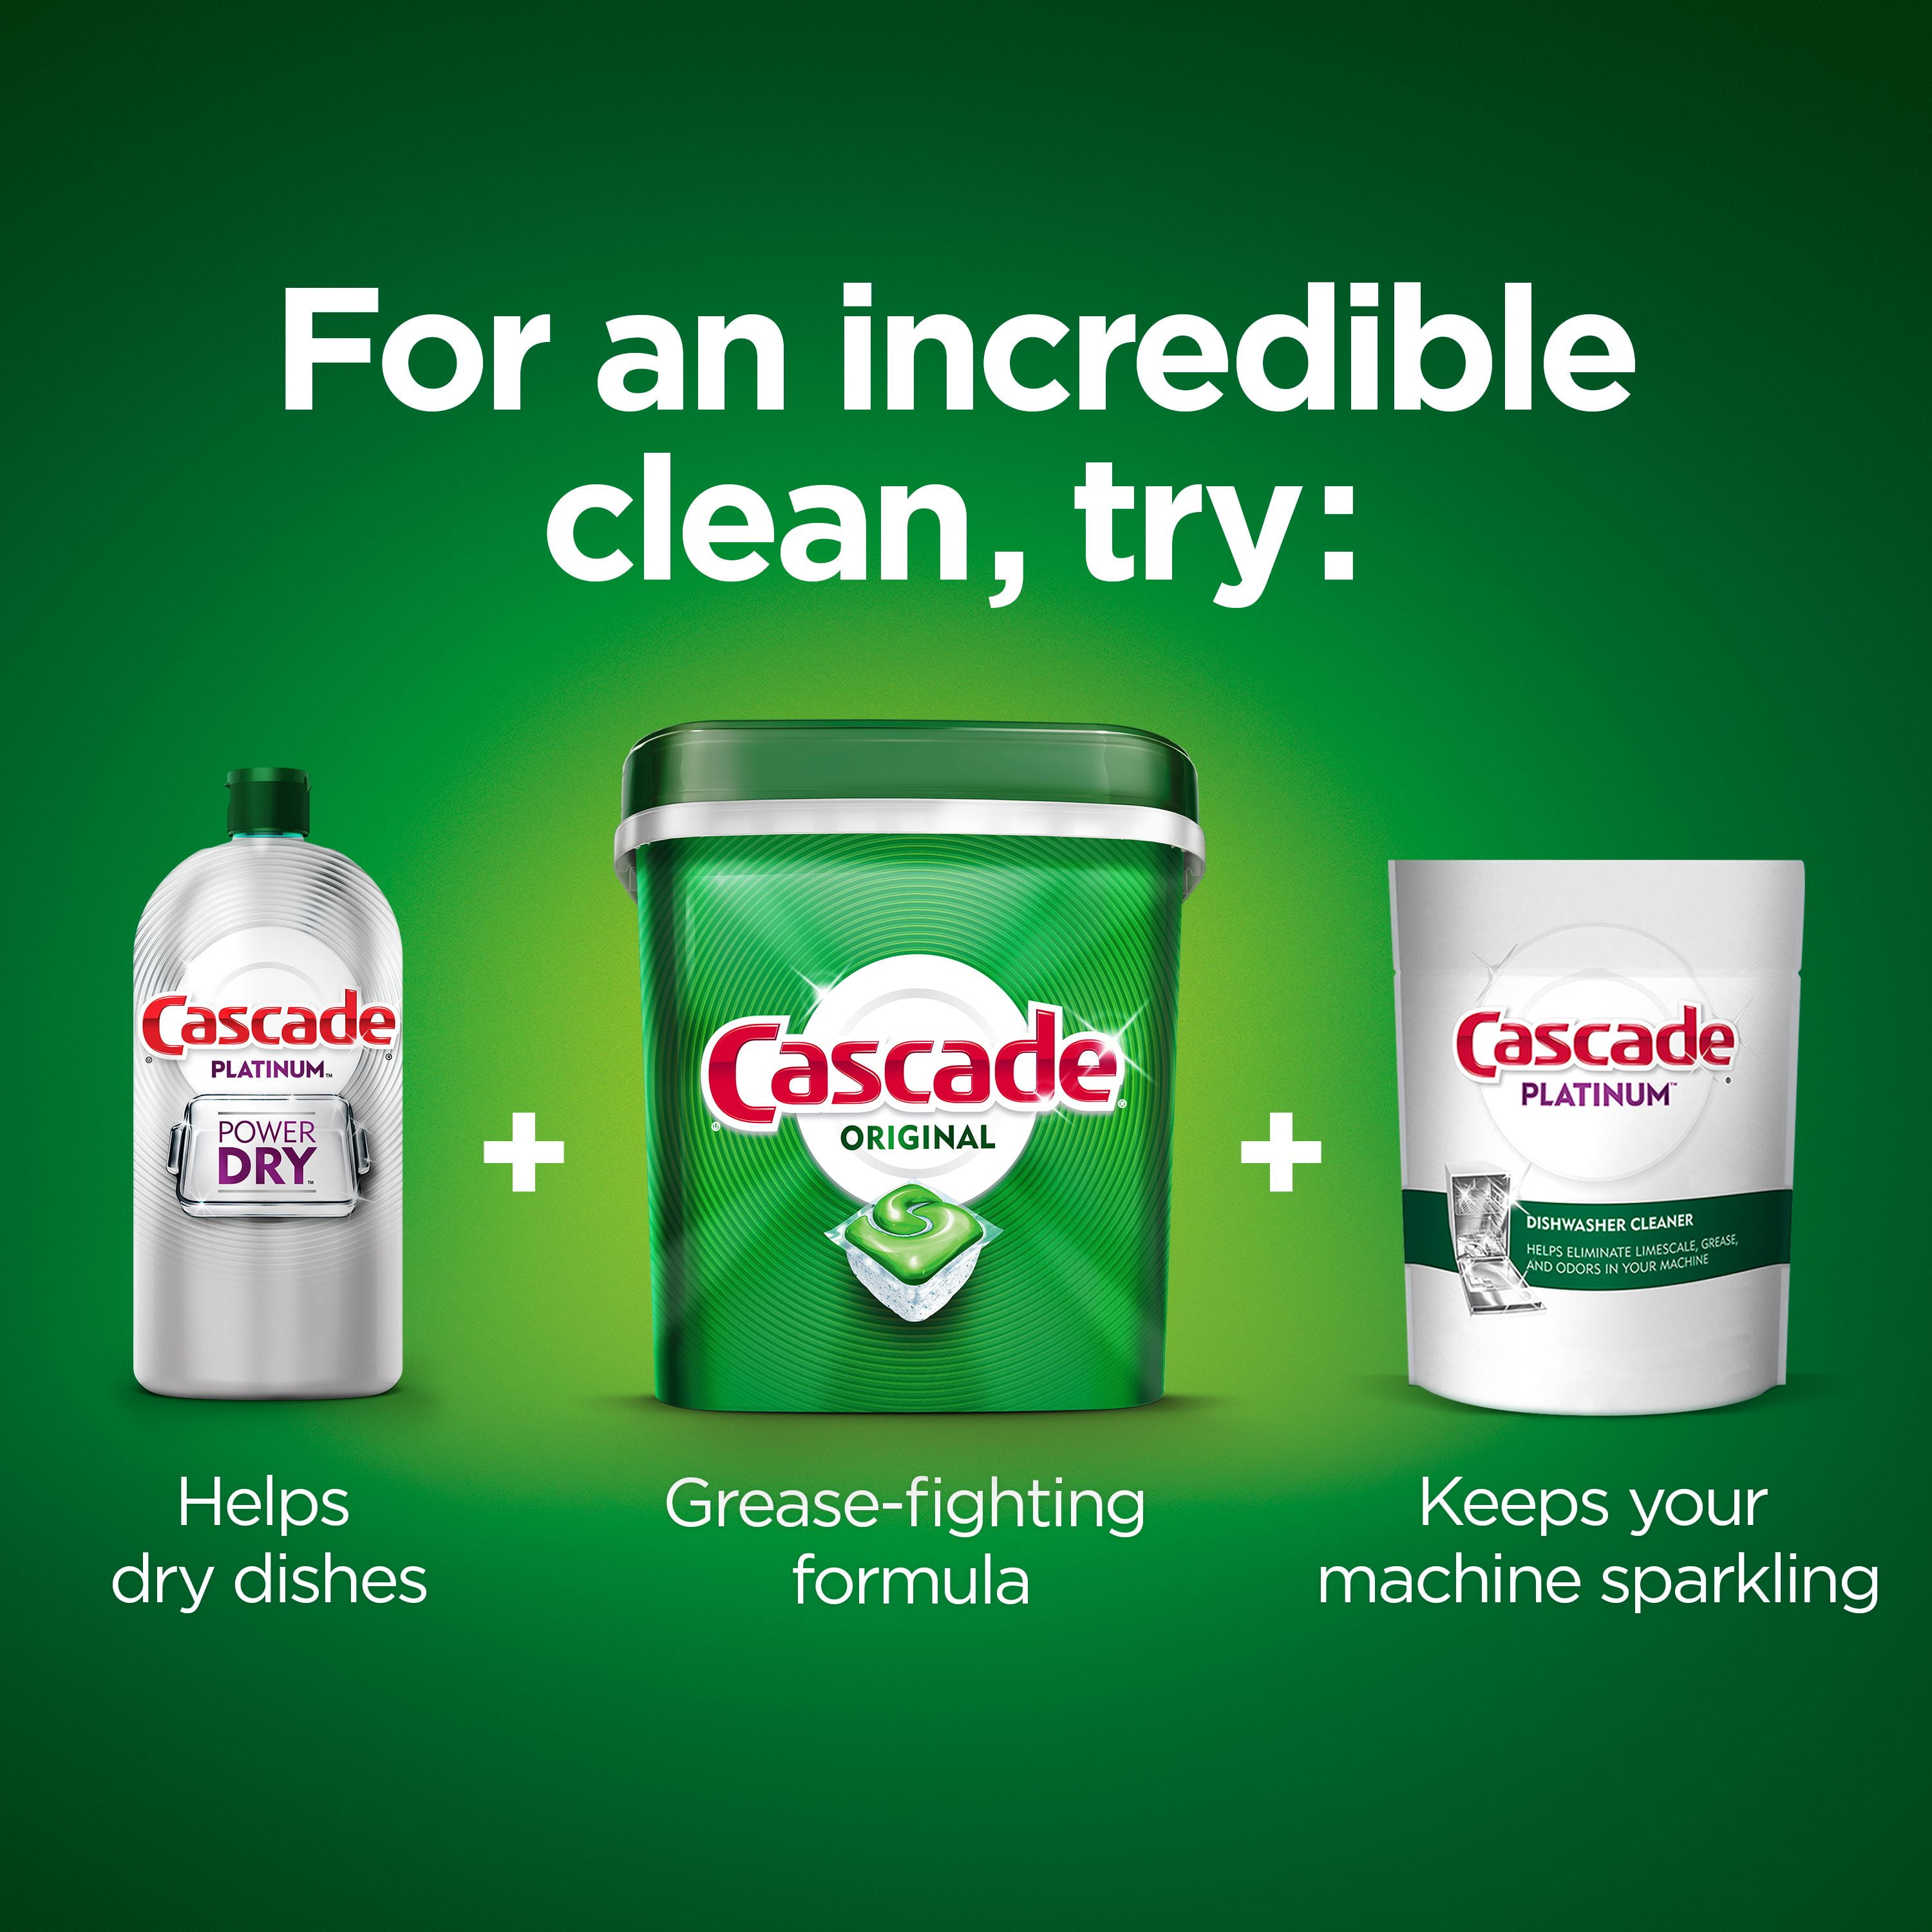 Cascade Actionpacs 85-Count Fresh Dishwasher Detergent at